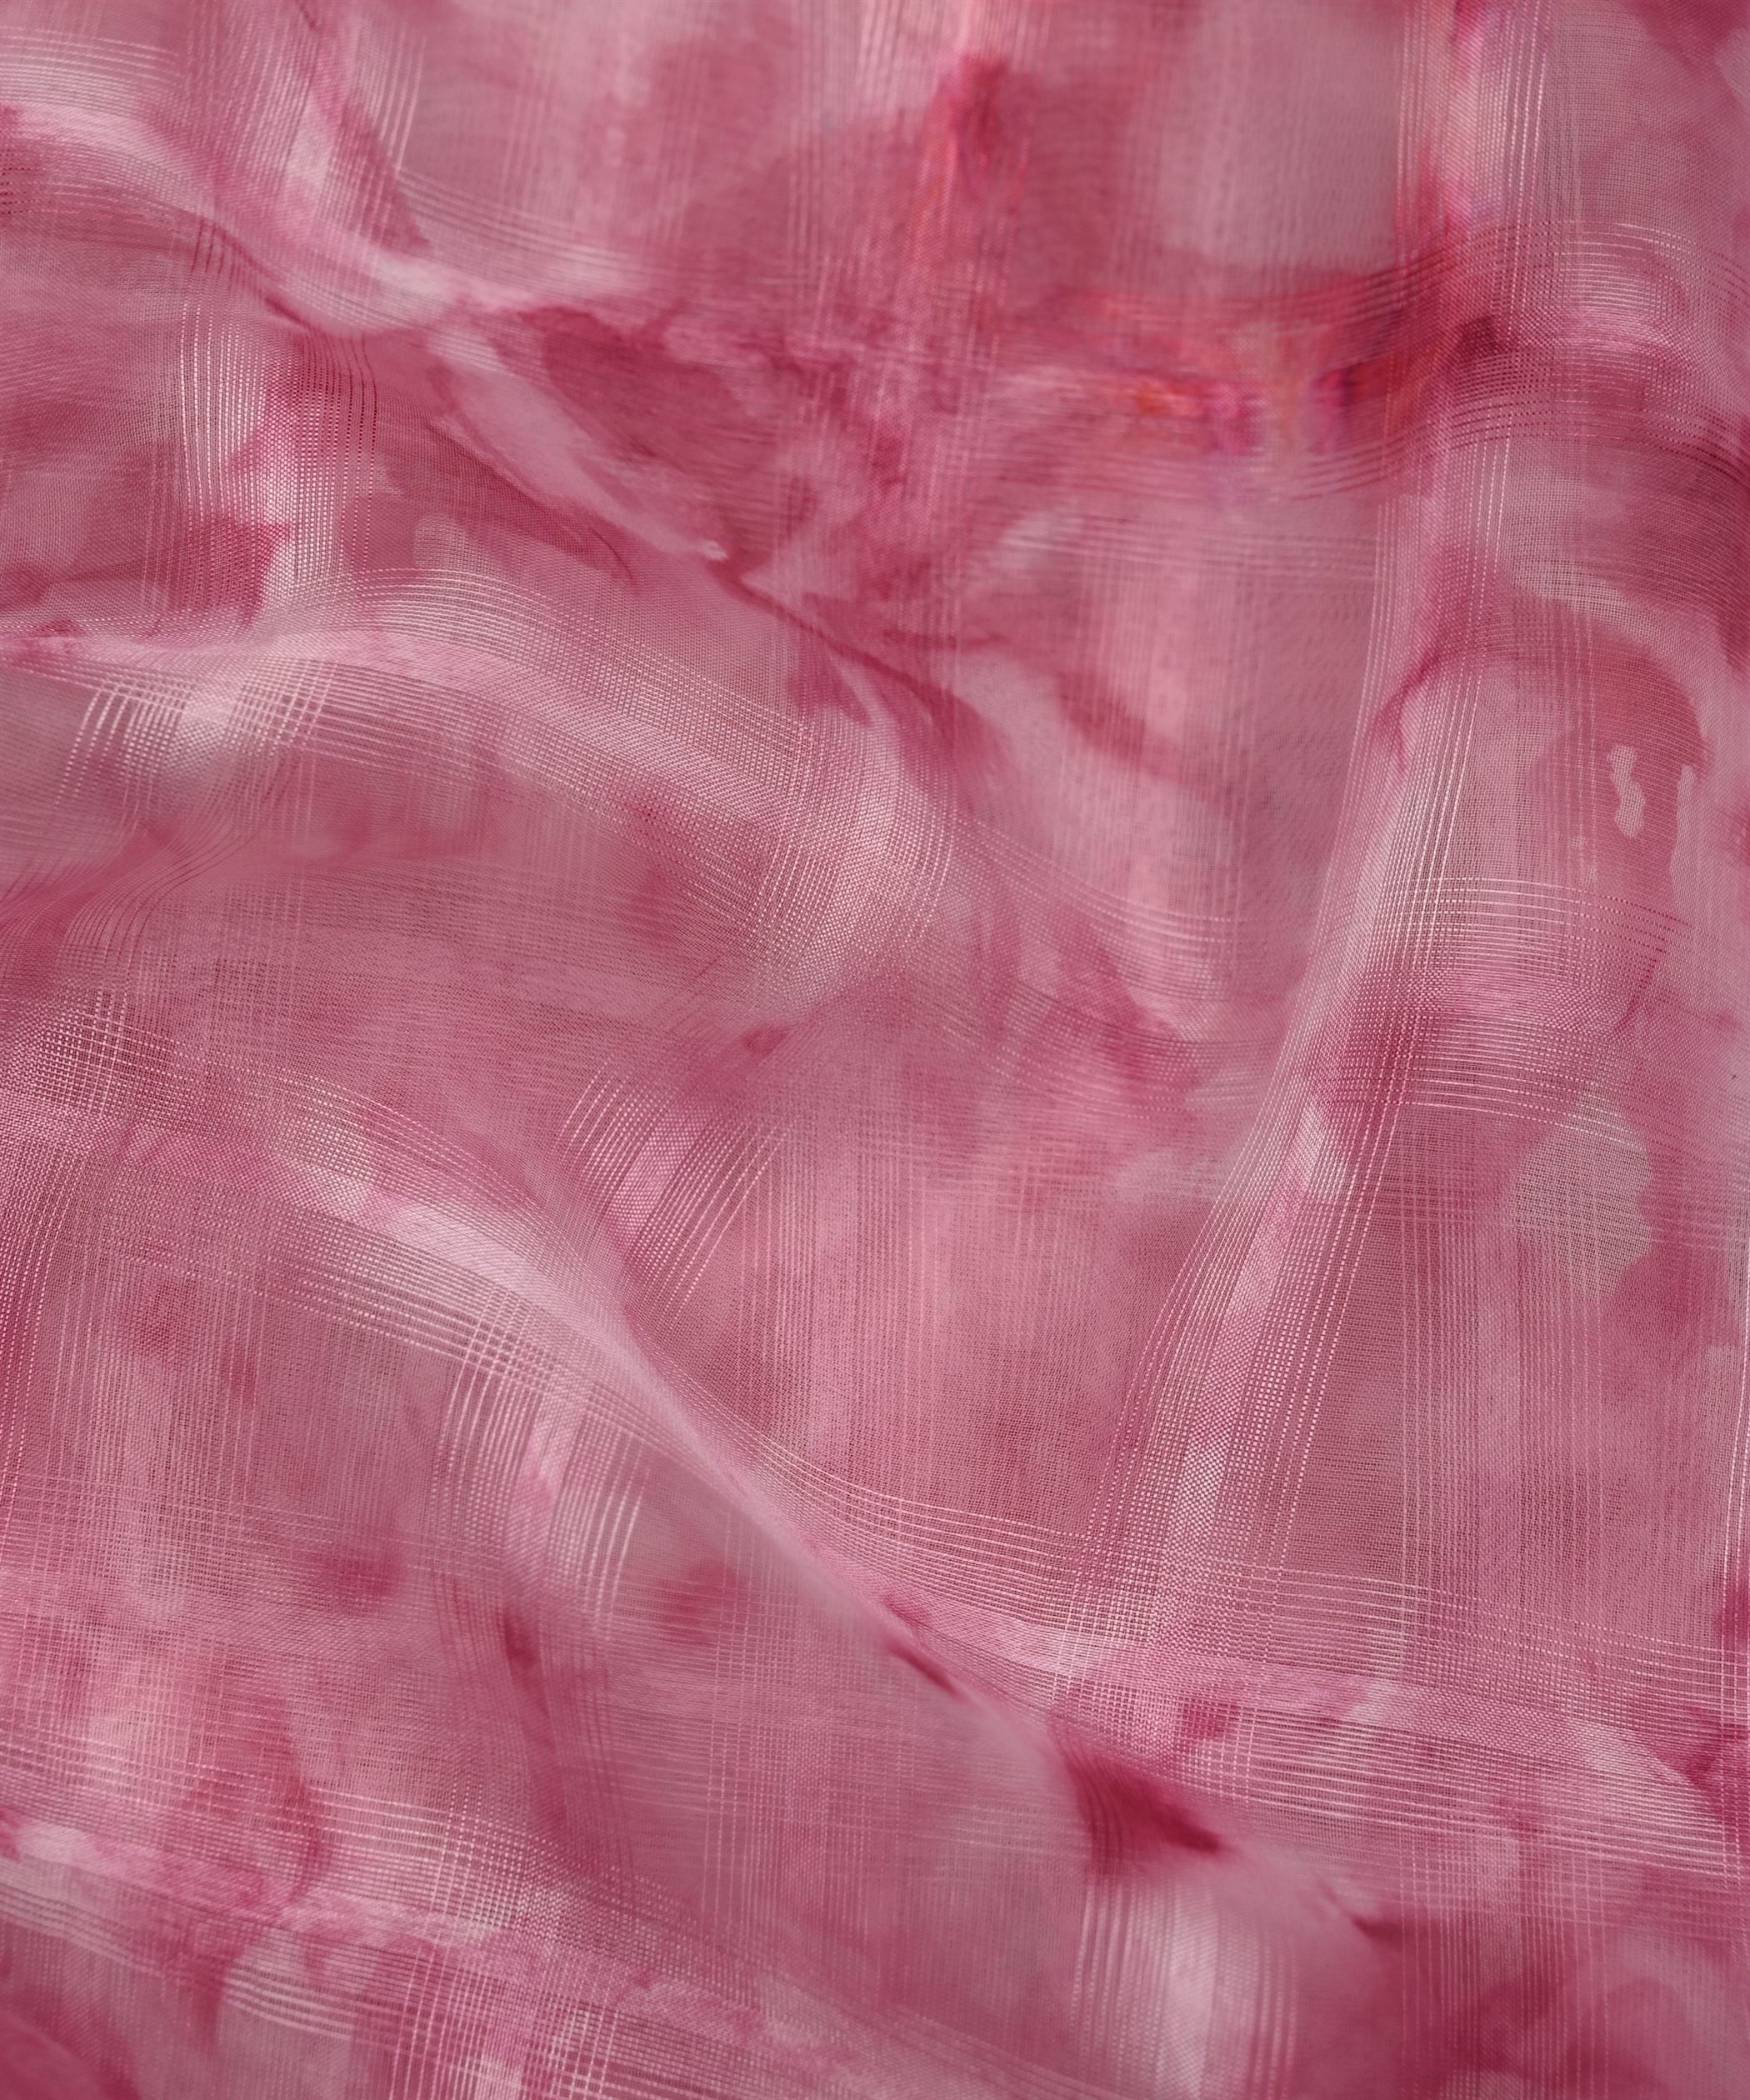 Pink Shibori Organza Fabric with Checks